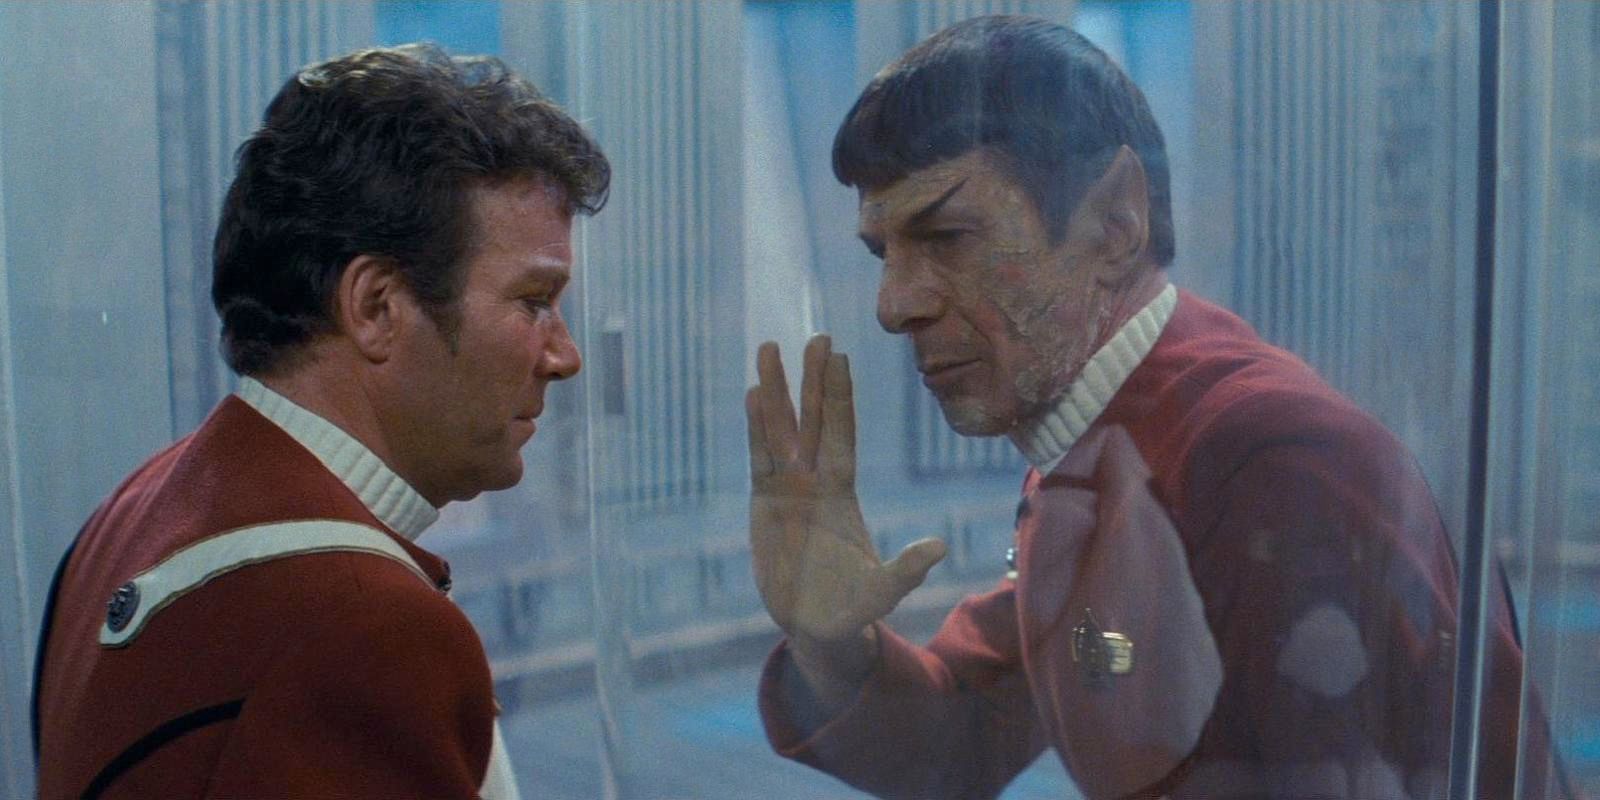 William Shatner as Captain Kirk and Leonard Nimoy as Spock say goodbye during Spock's death scene in Star Trek II: The Wrath of Khan.